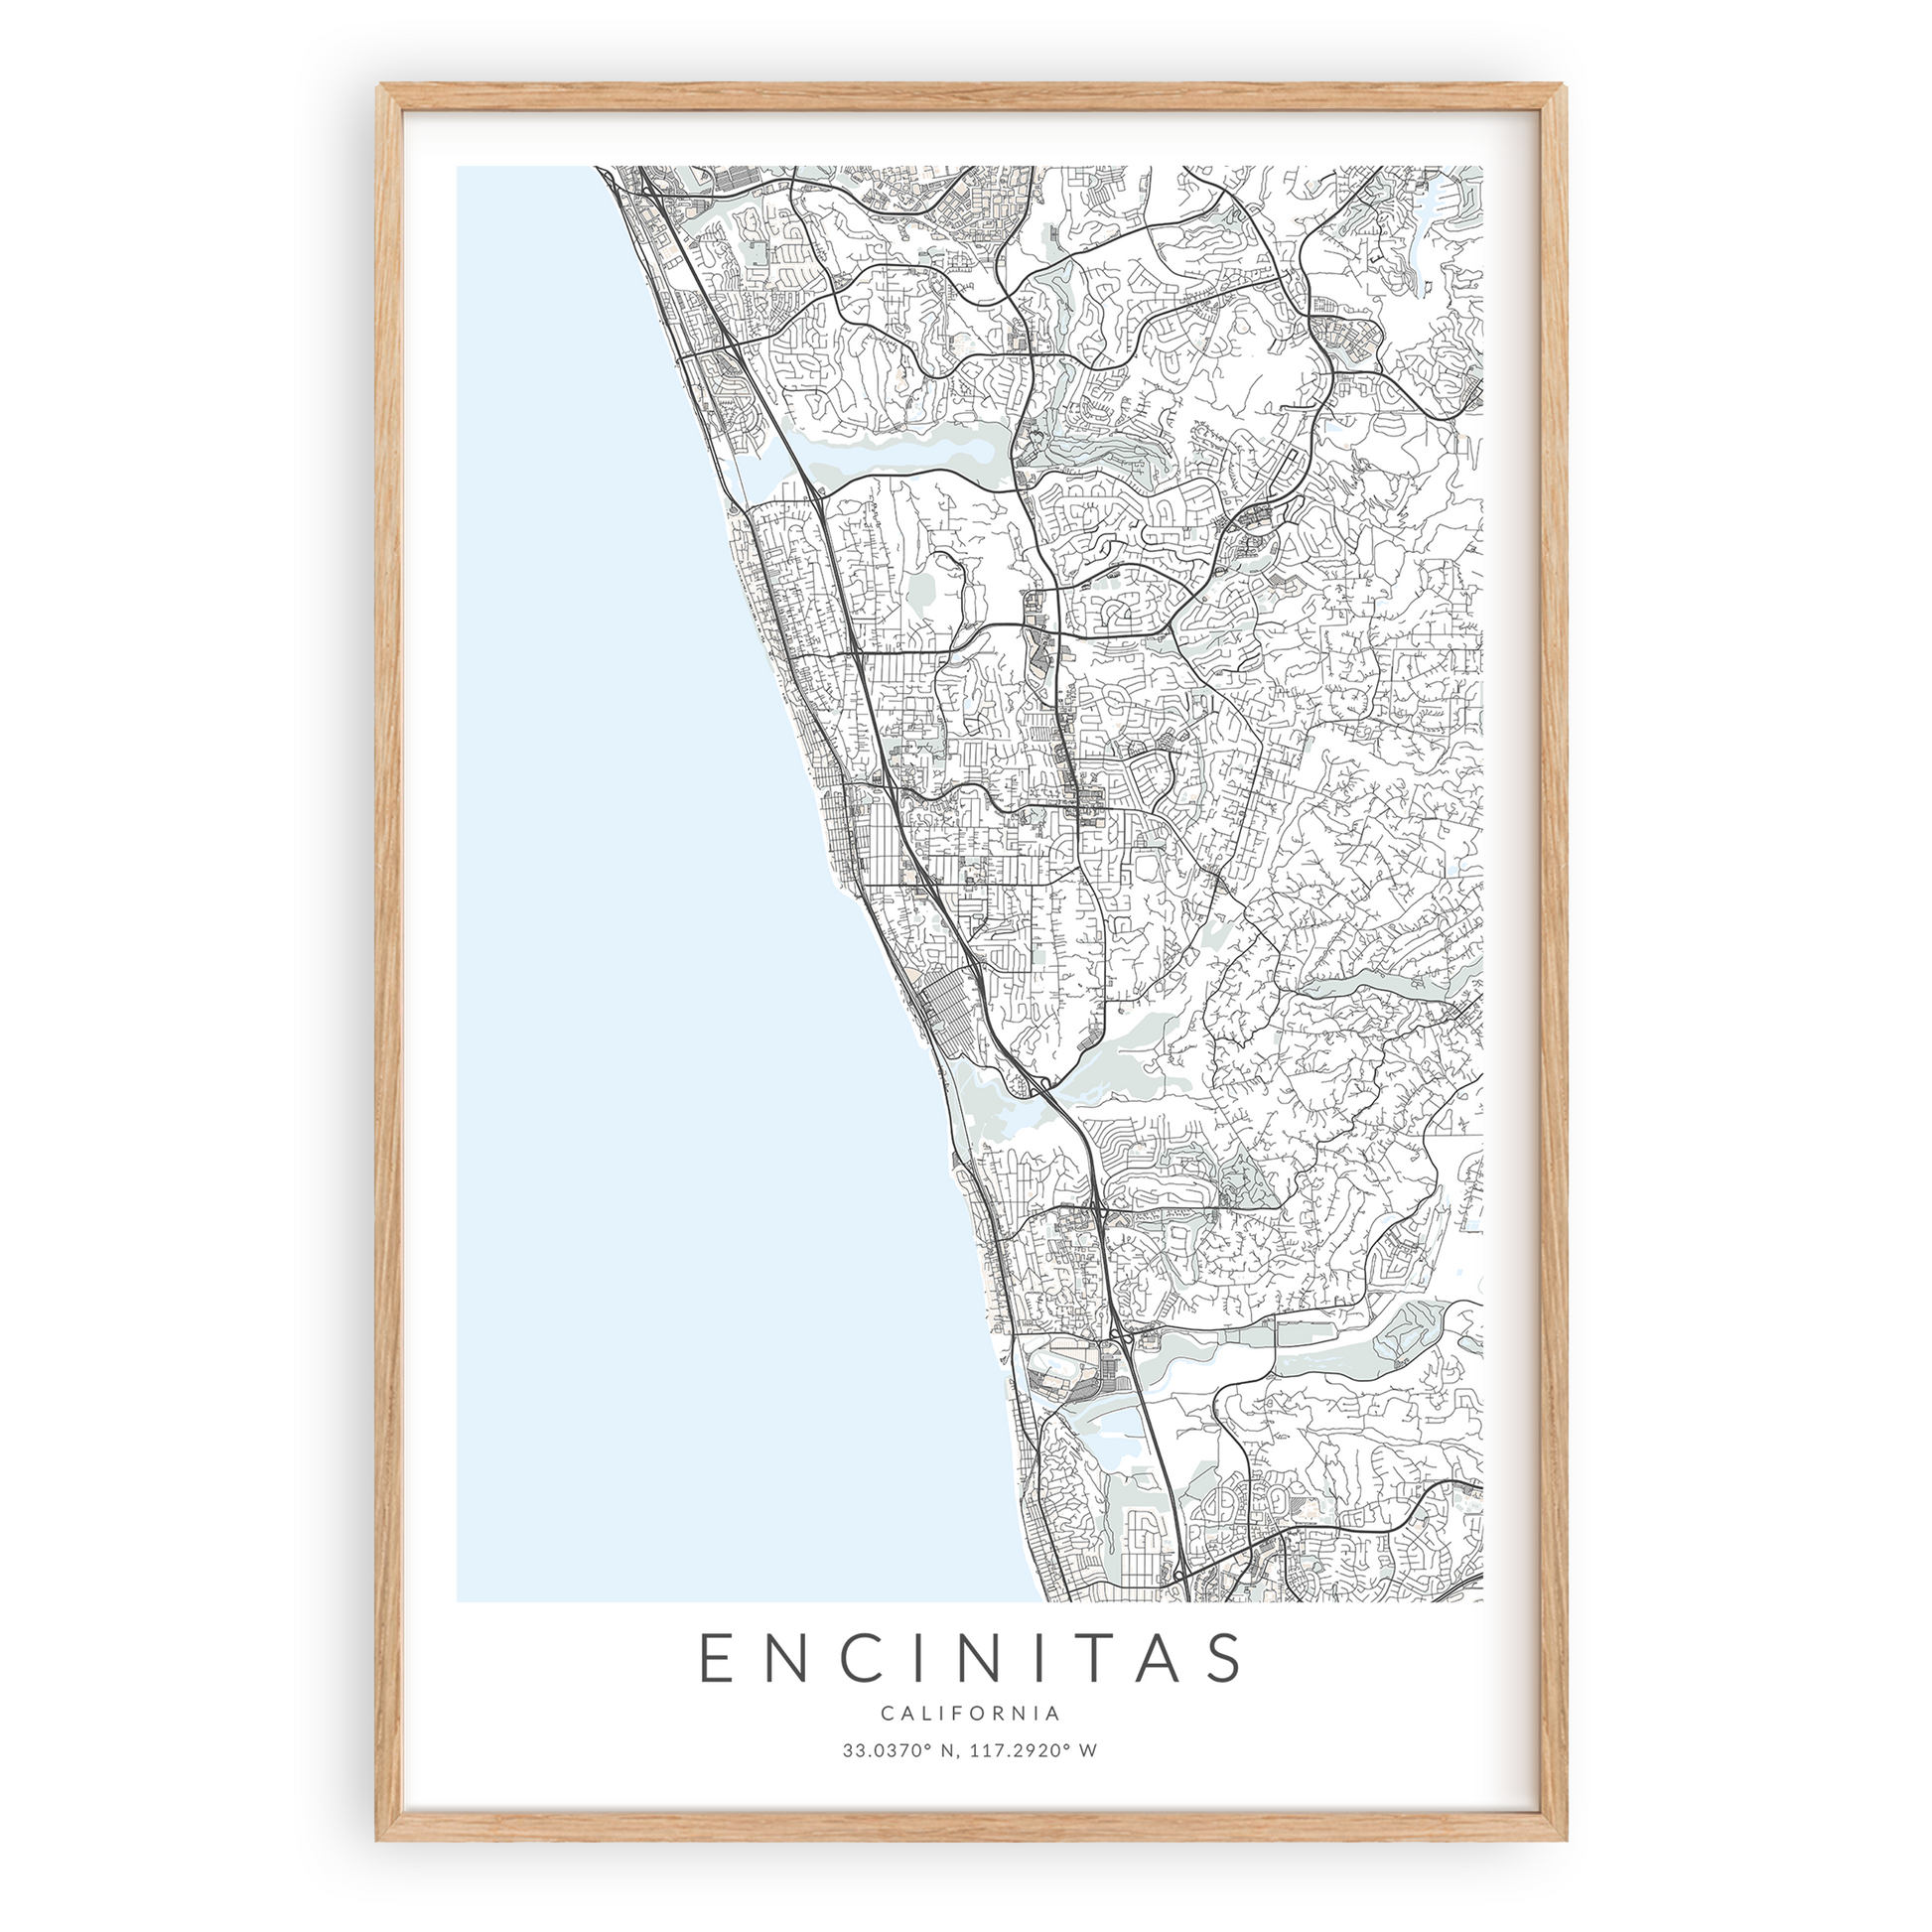 encinitas california map print in wood frame on white background